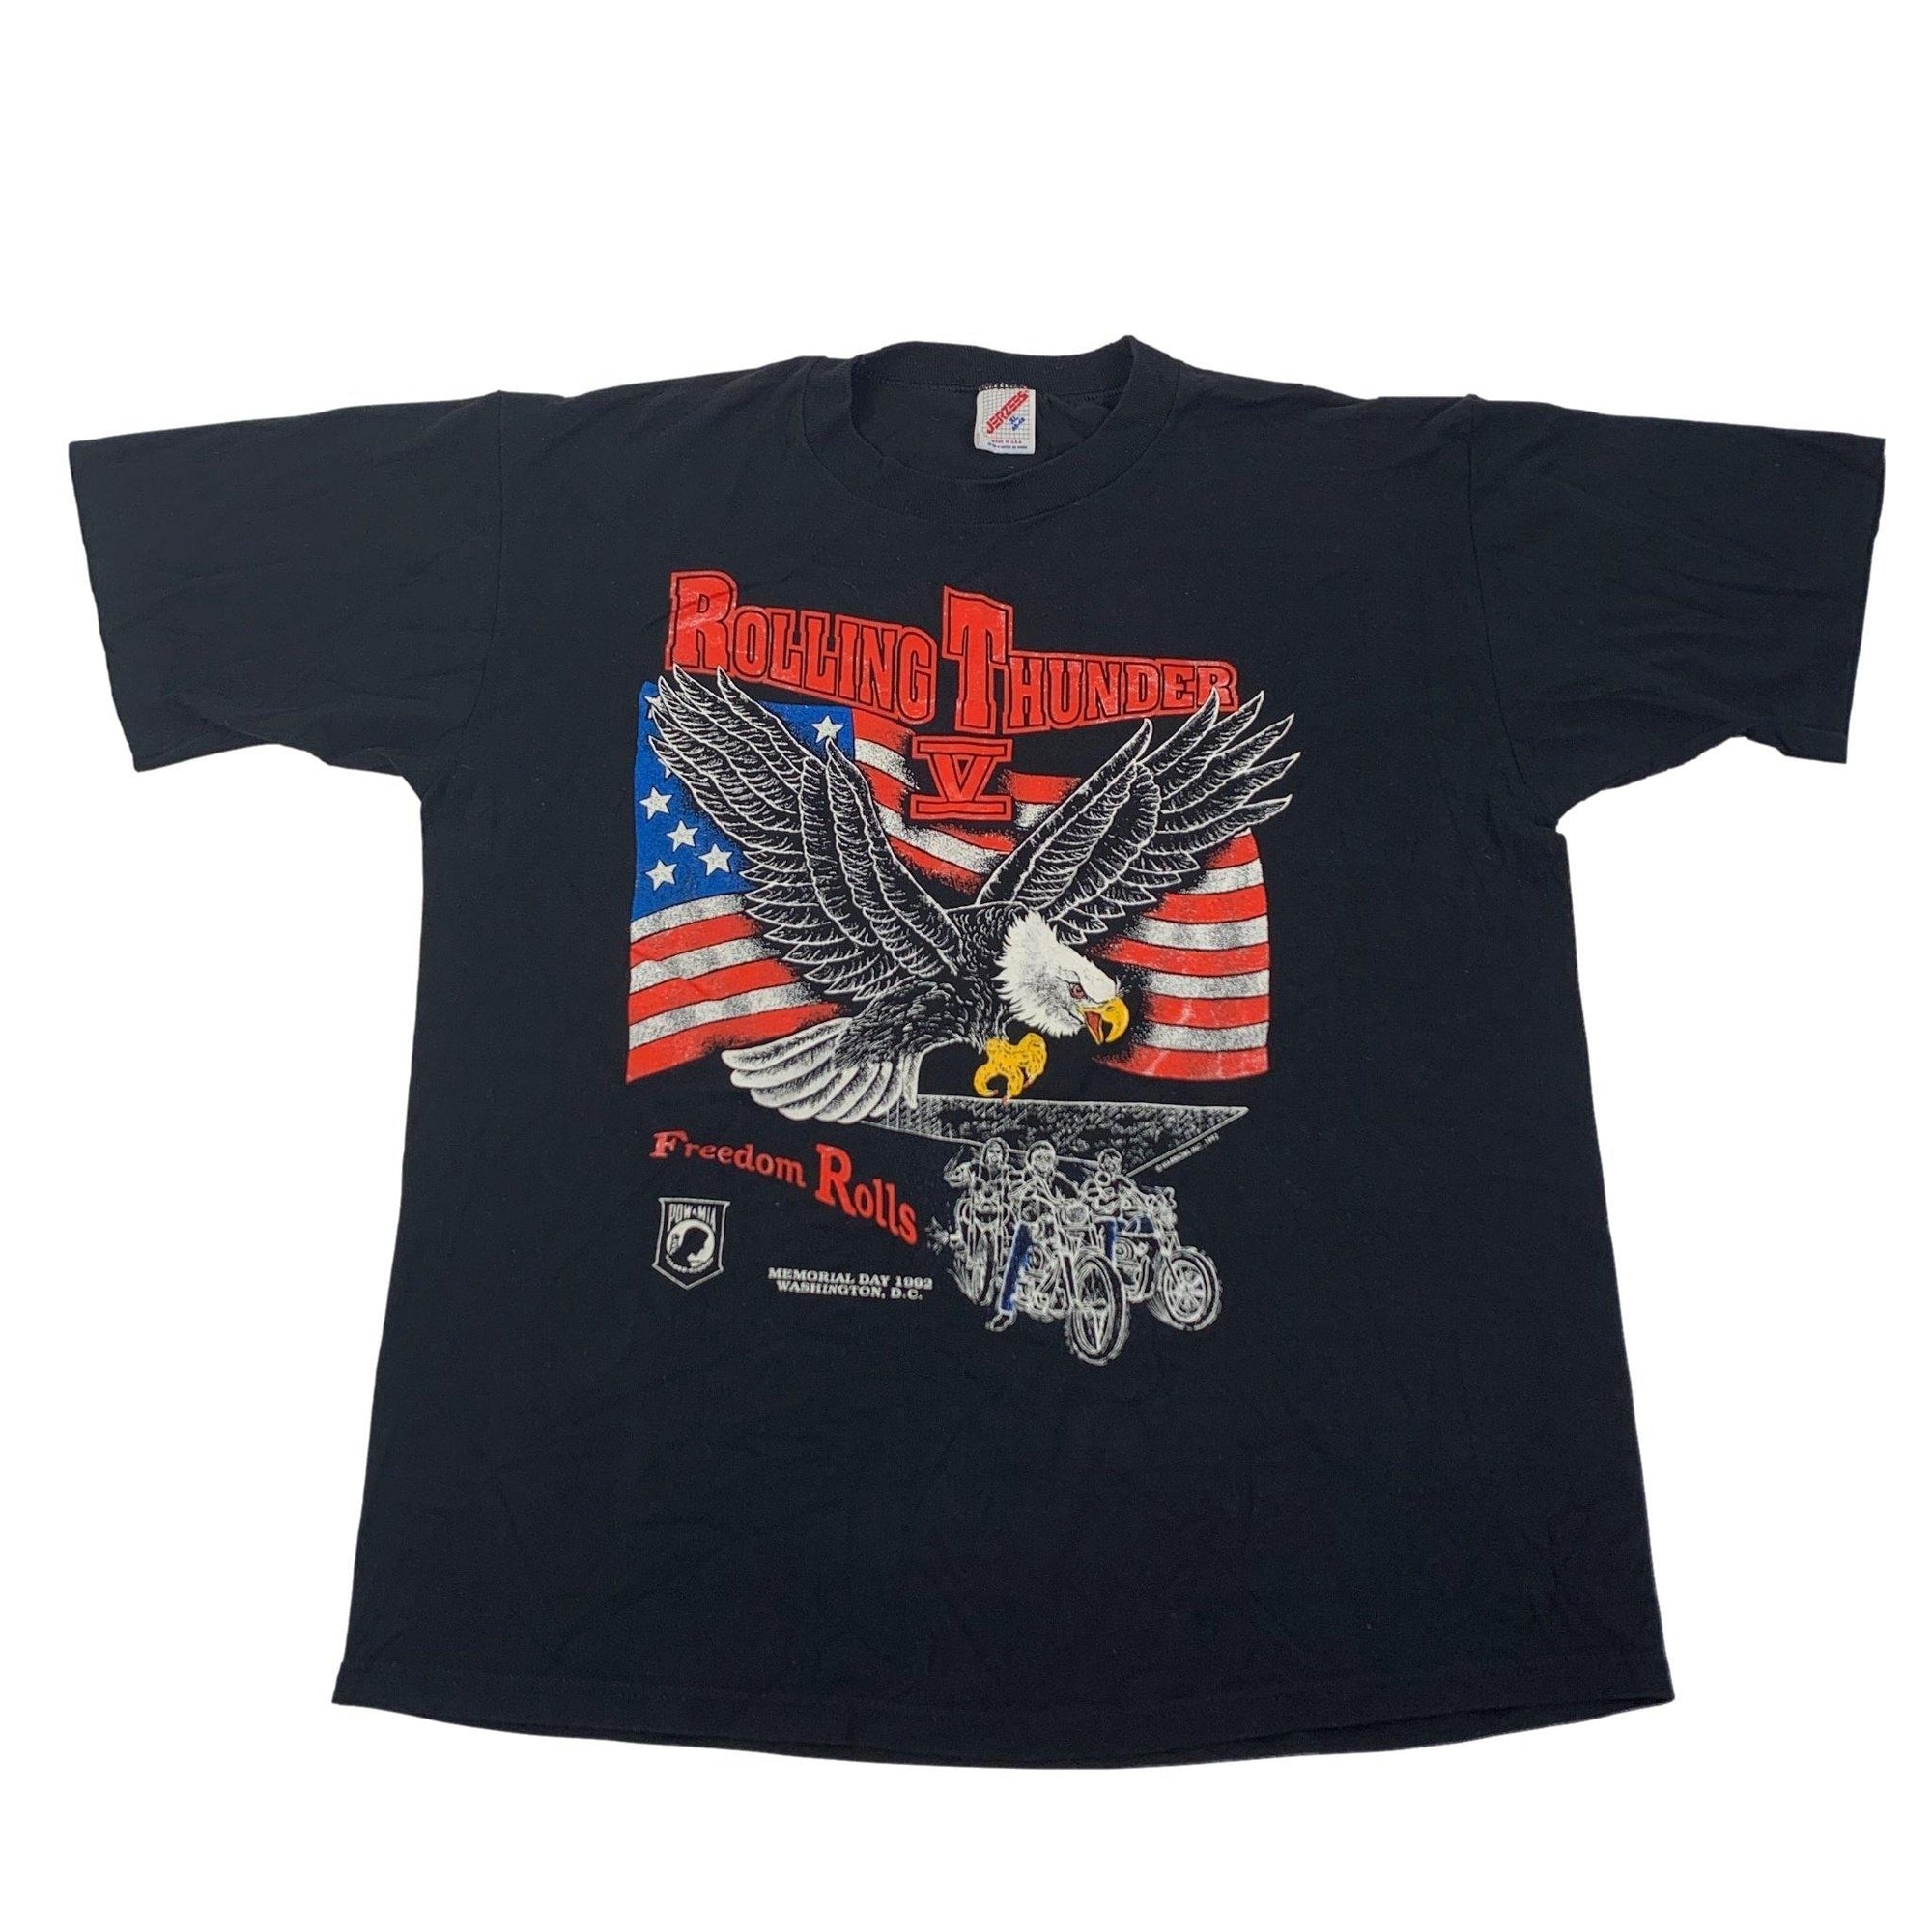 Vintage Rolling Thunder "Freedom Rolls" T-Shirt - jointcustodydc